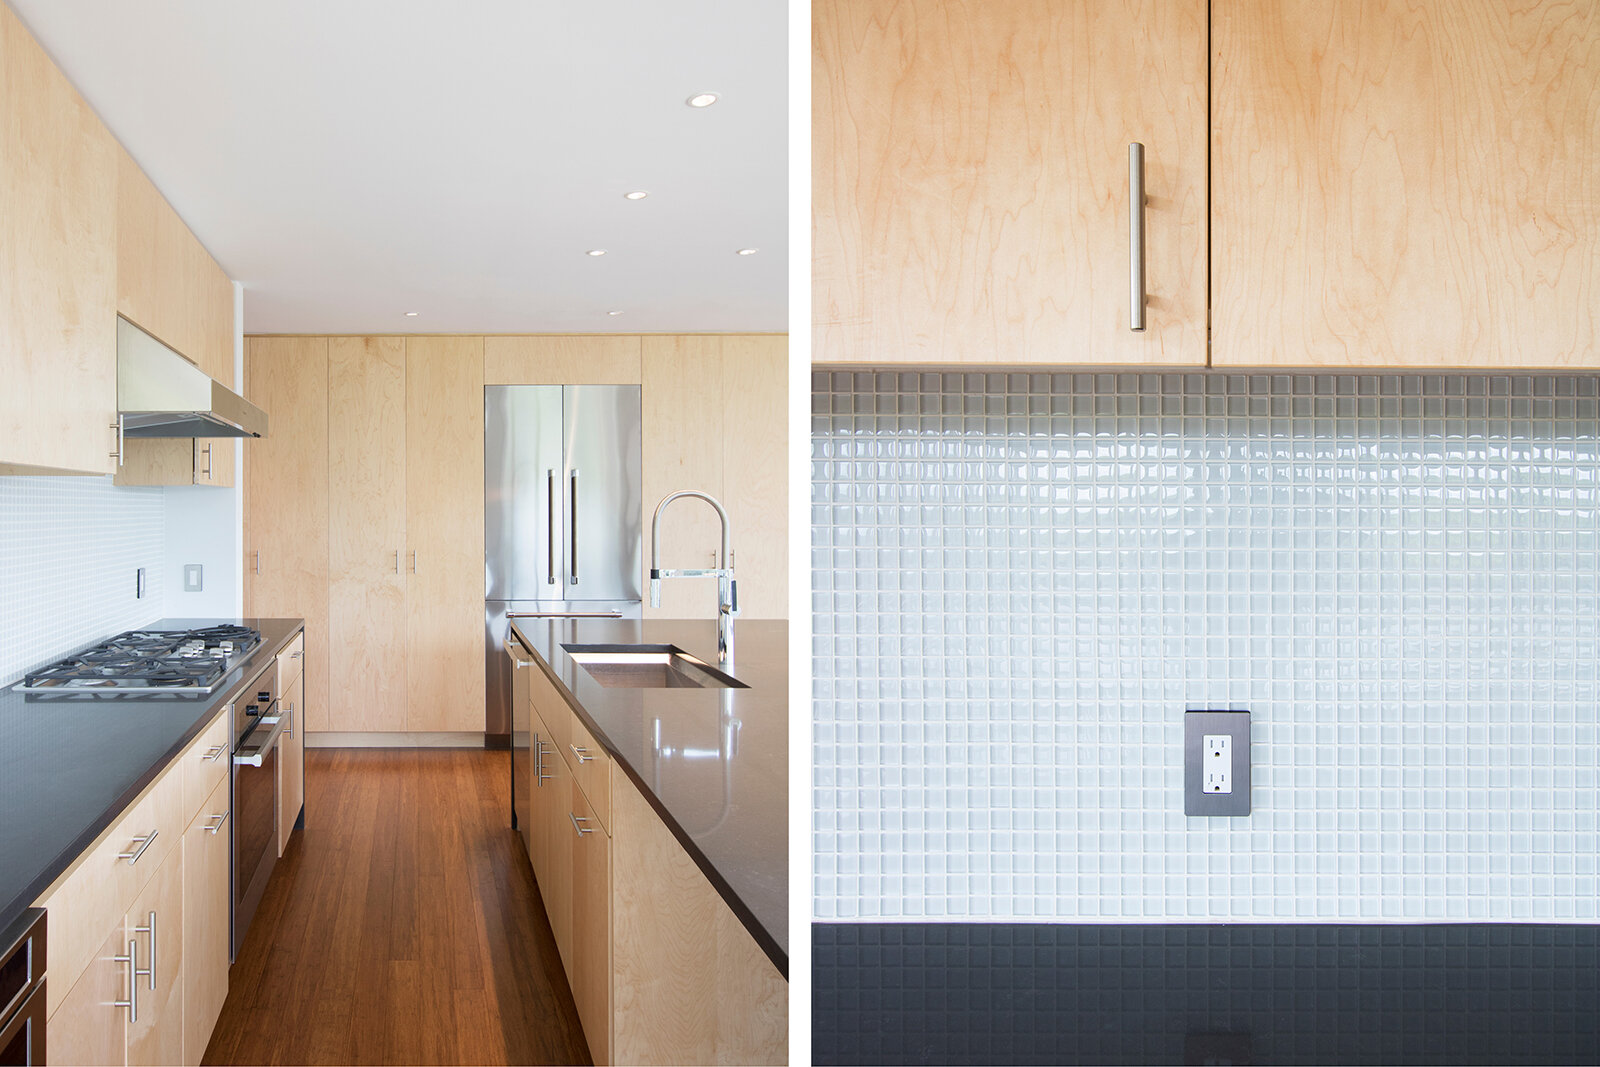 15-res4-re4a-resolution-4-architecture-modern-modular-prefab-sharon residence-interior-kitchen-cabinet.jpg